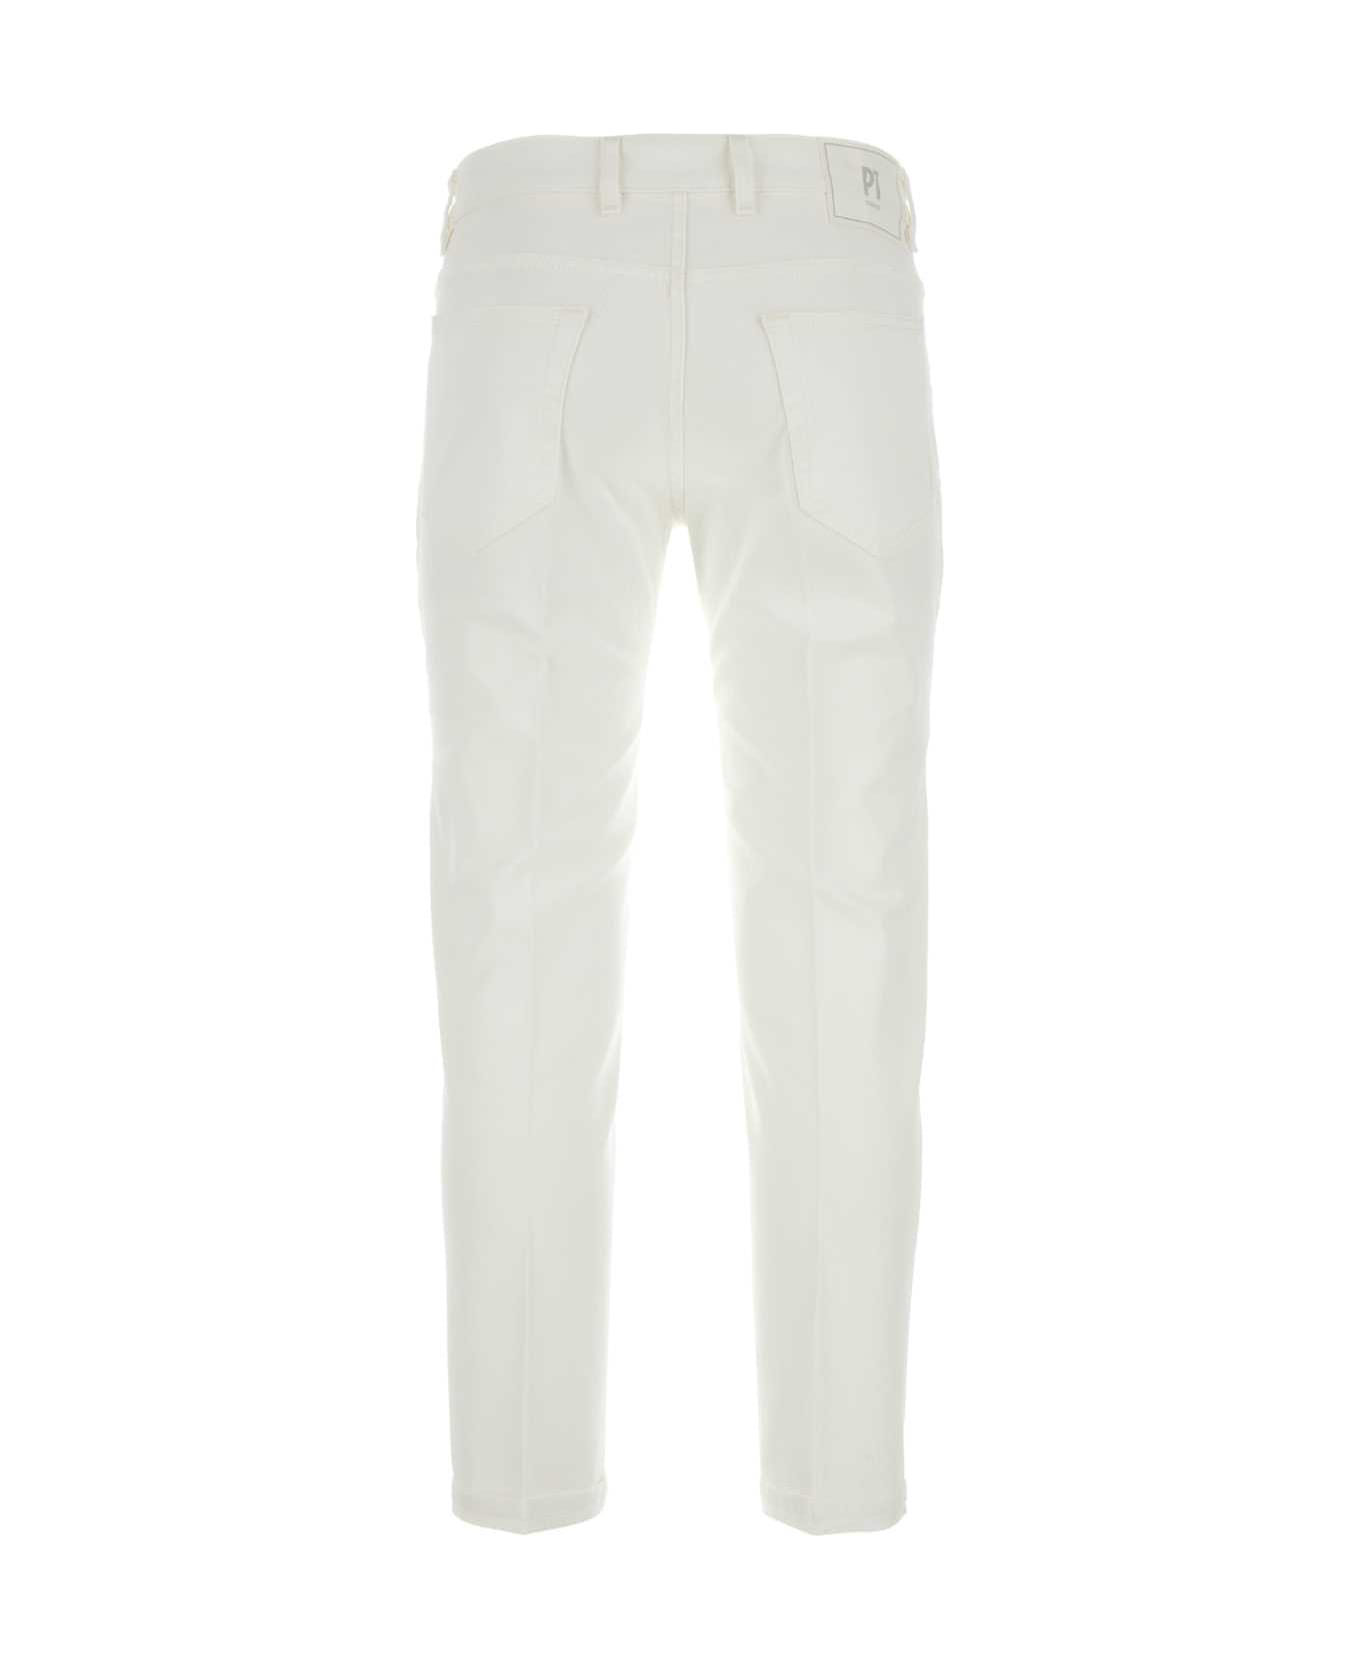 PT Torino White Stretch Denim Indie Jeans - BIANCO デニム